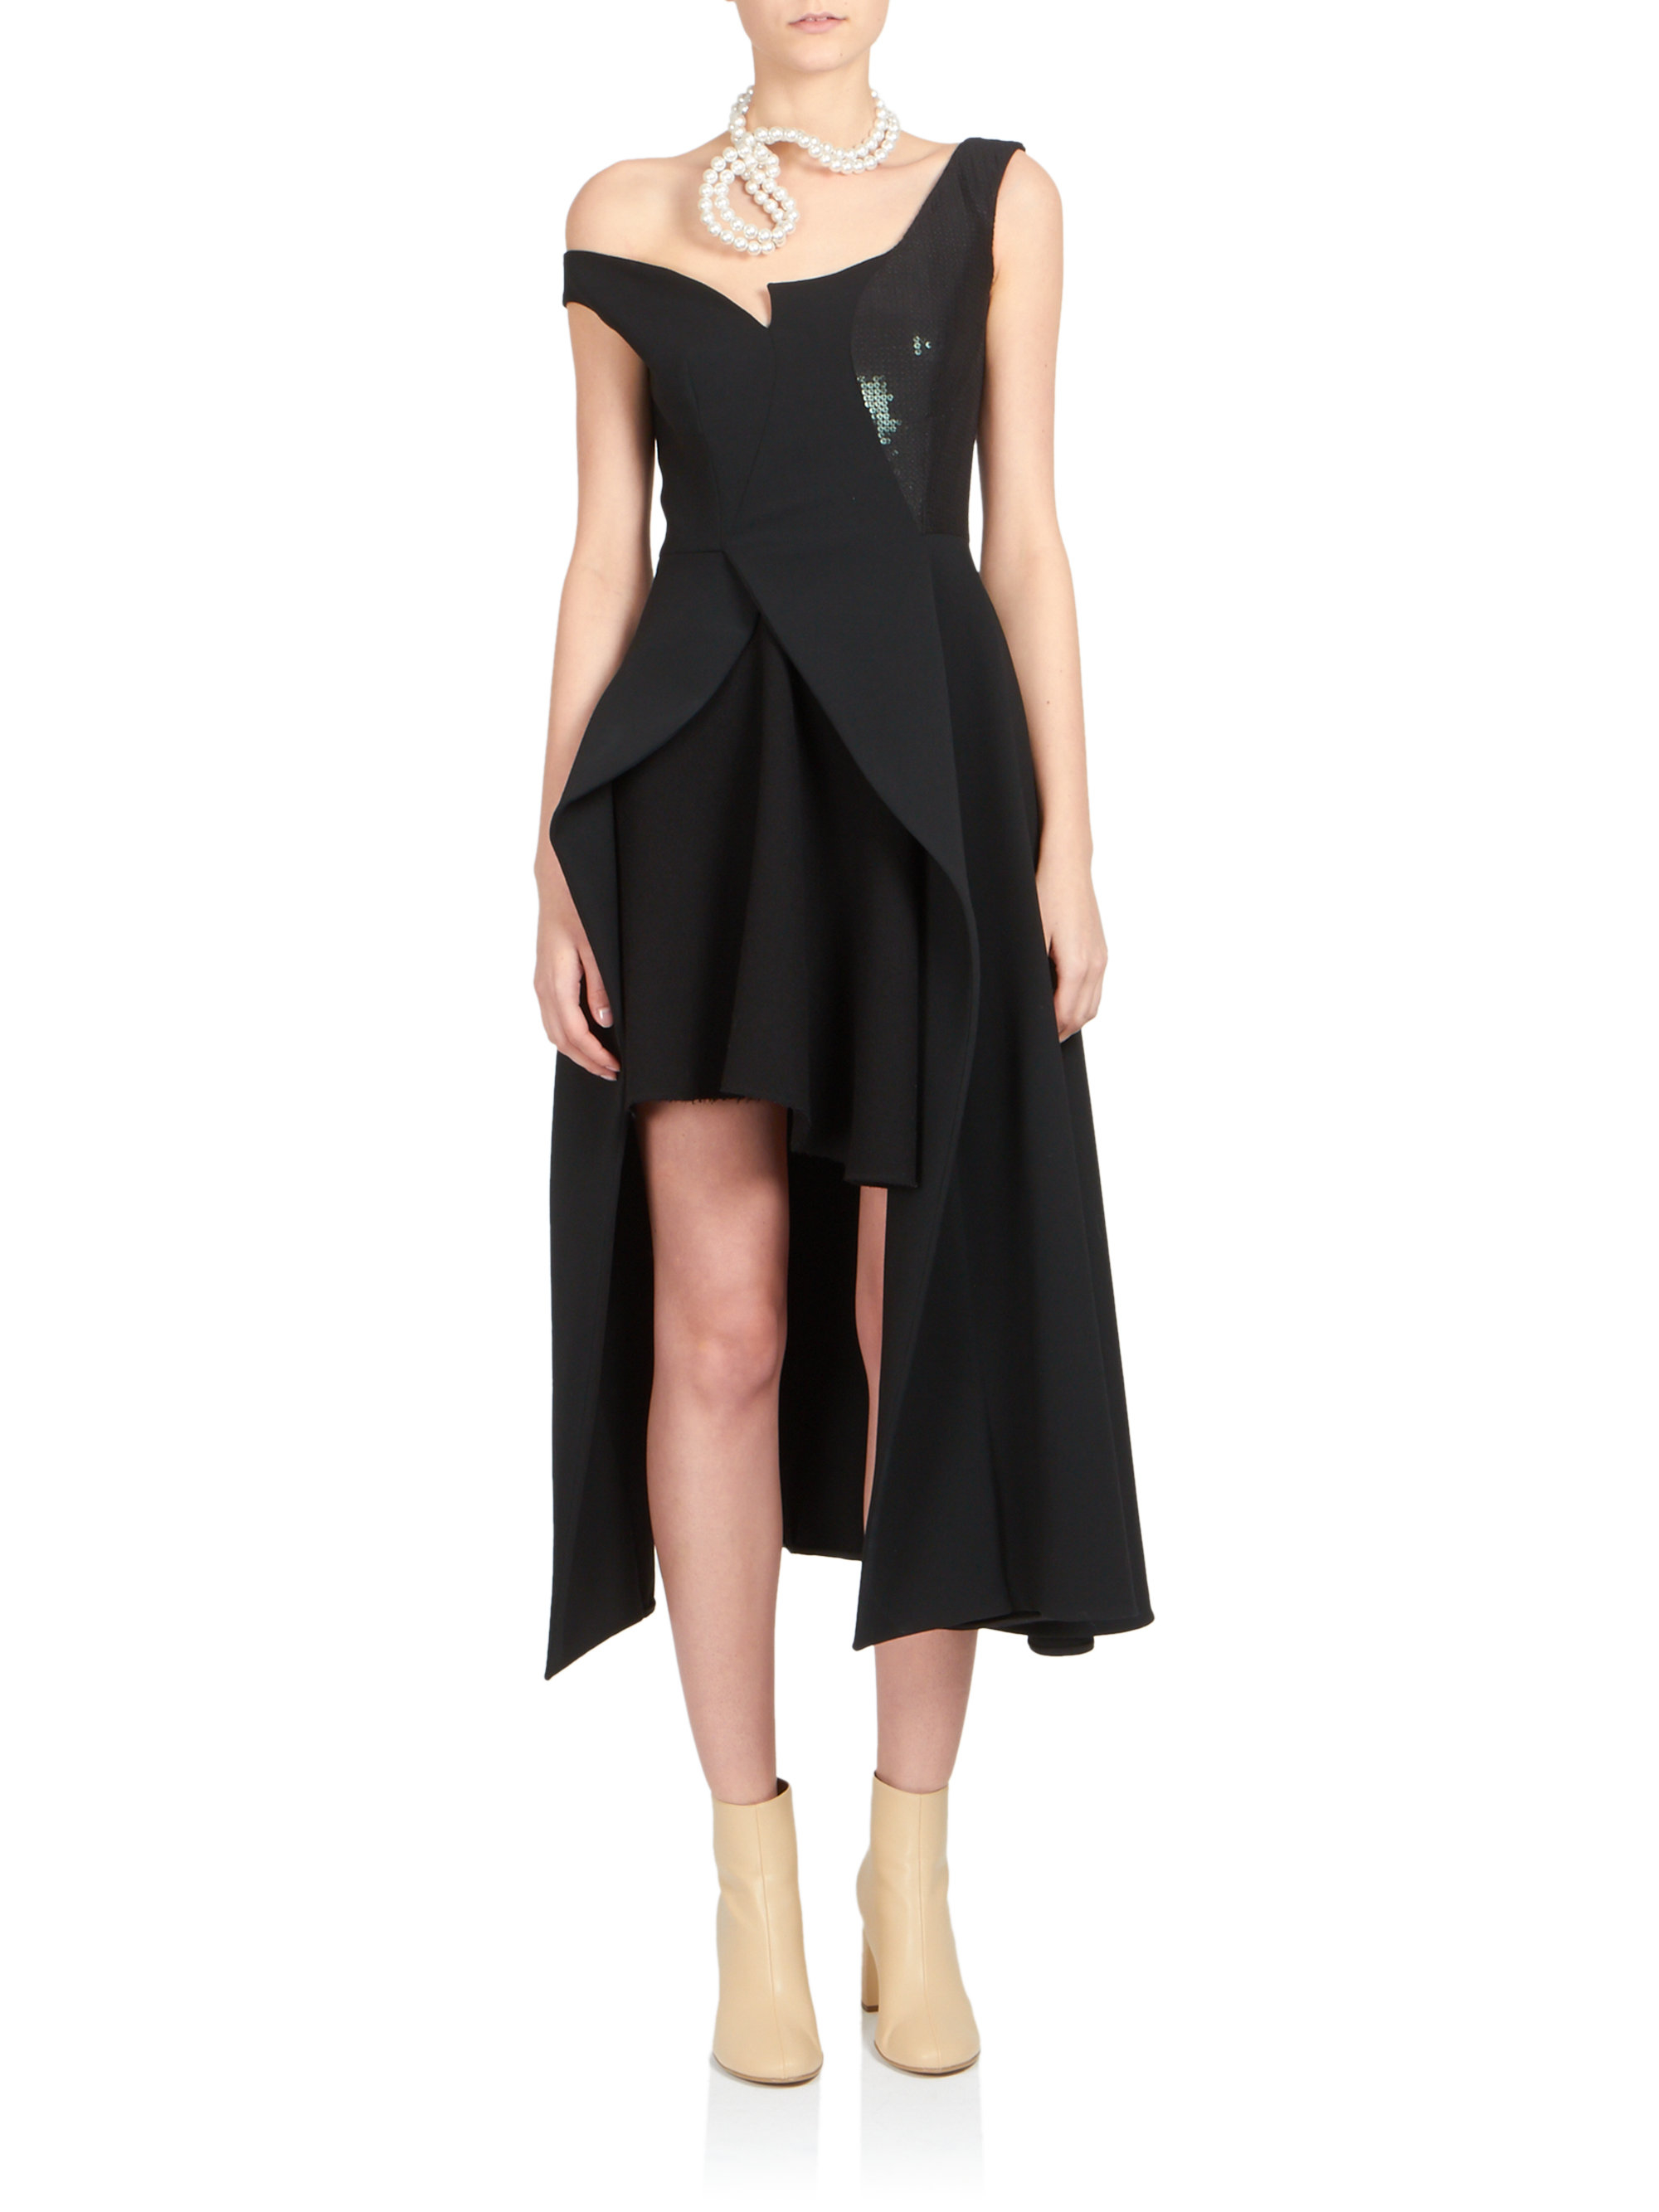 Lyst - Stella Mccartney Reily Off-shoulder Dress in Black